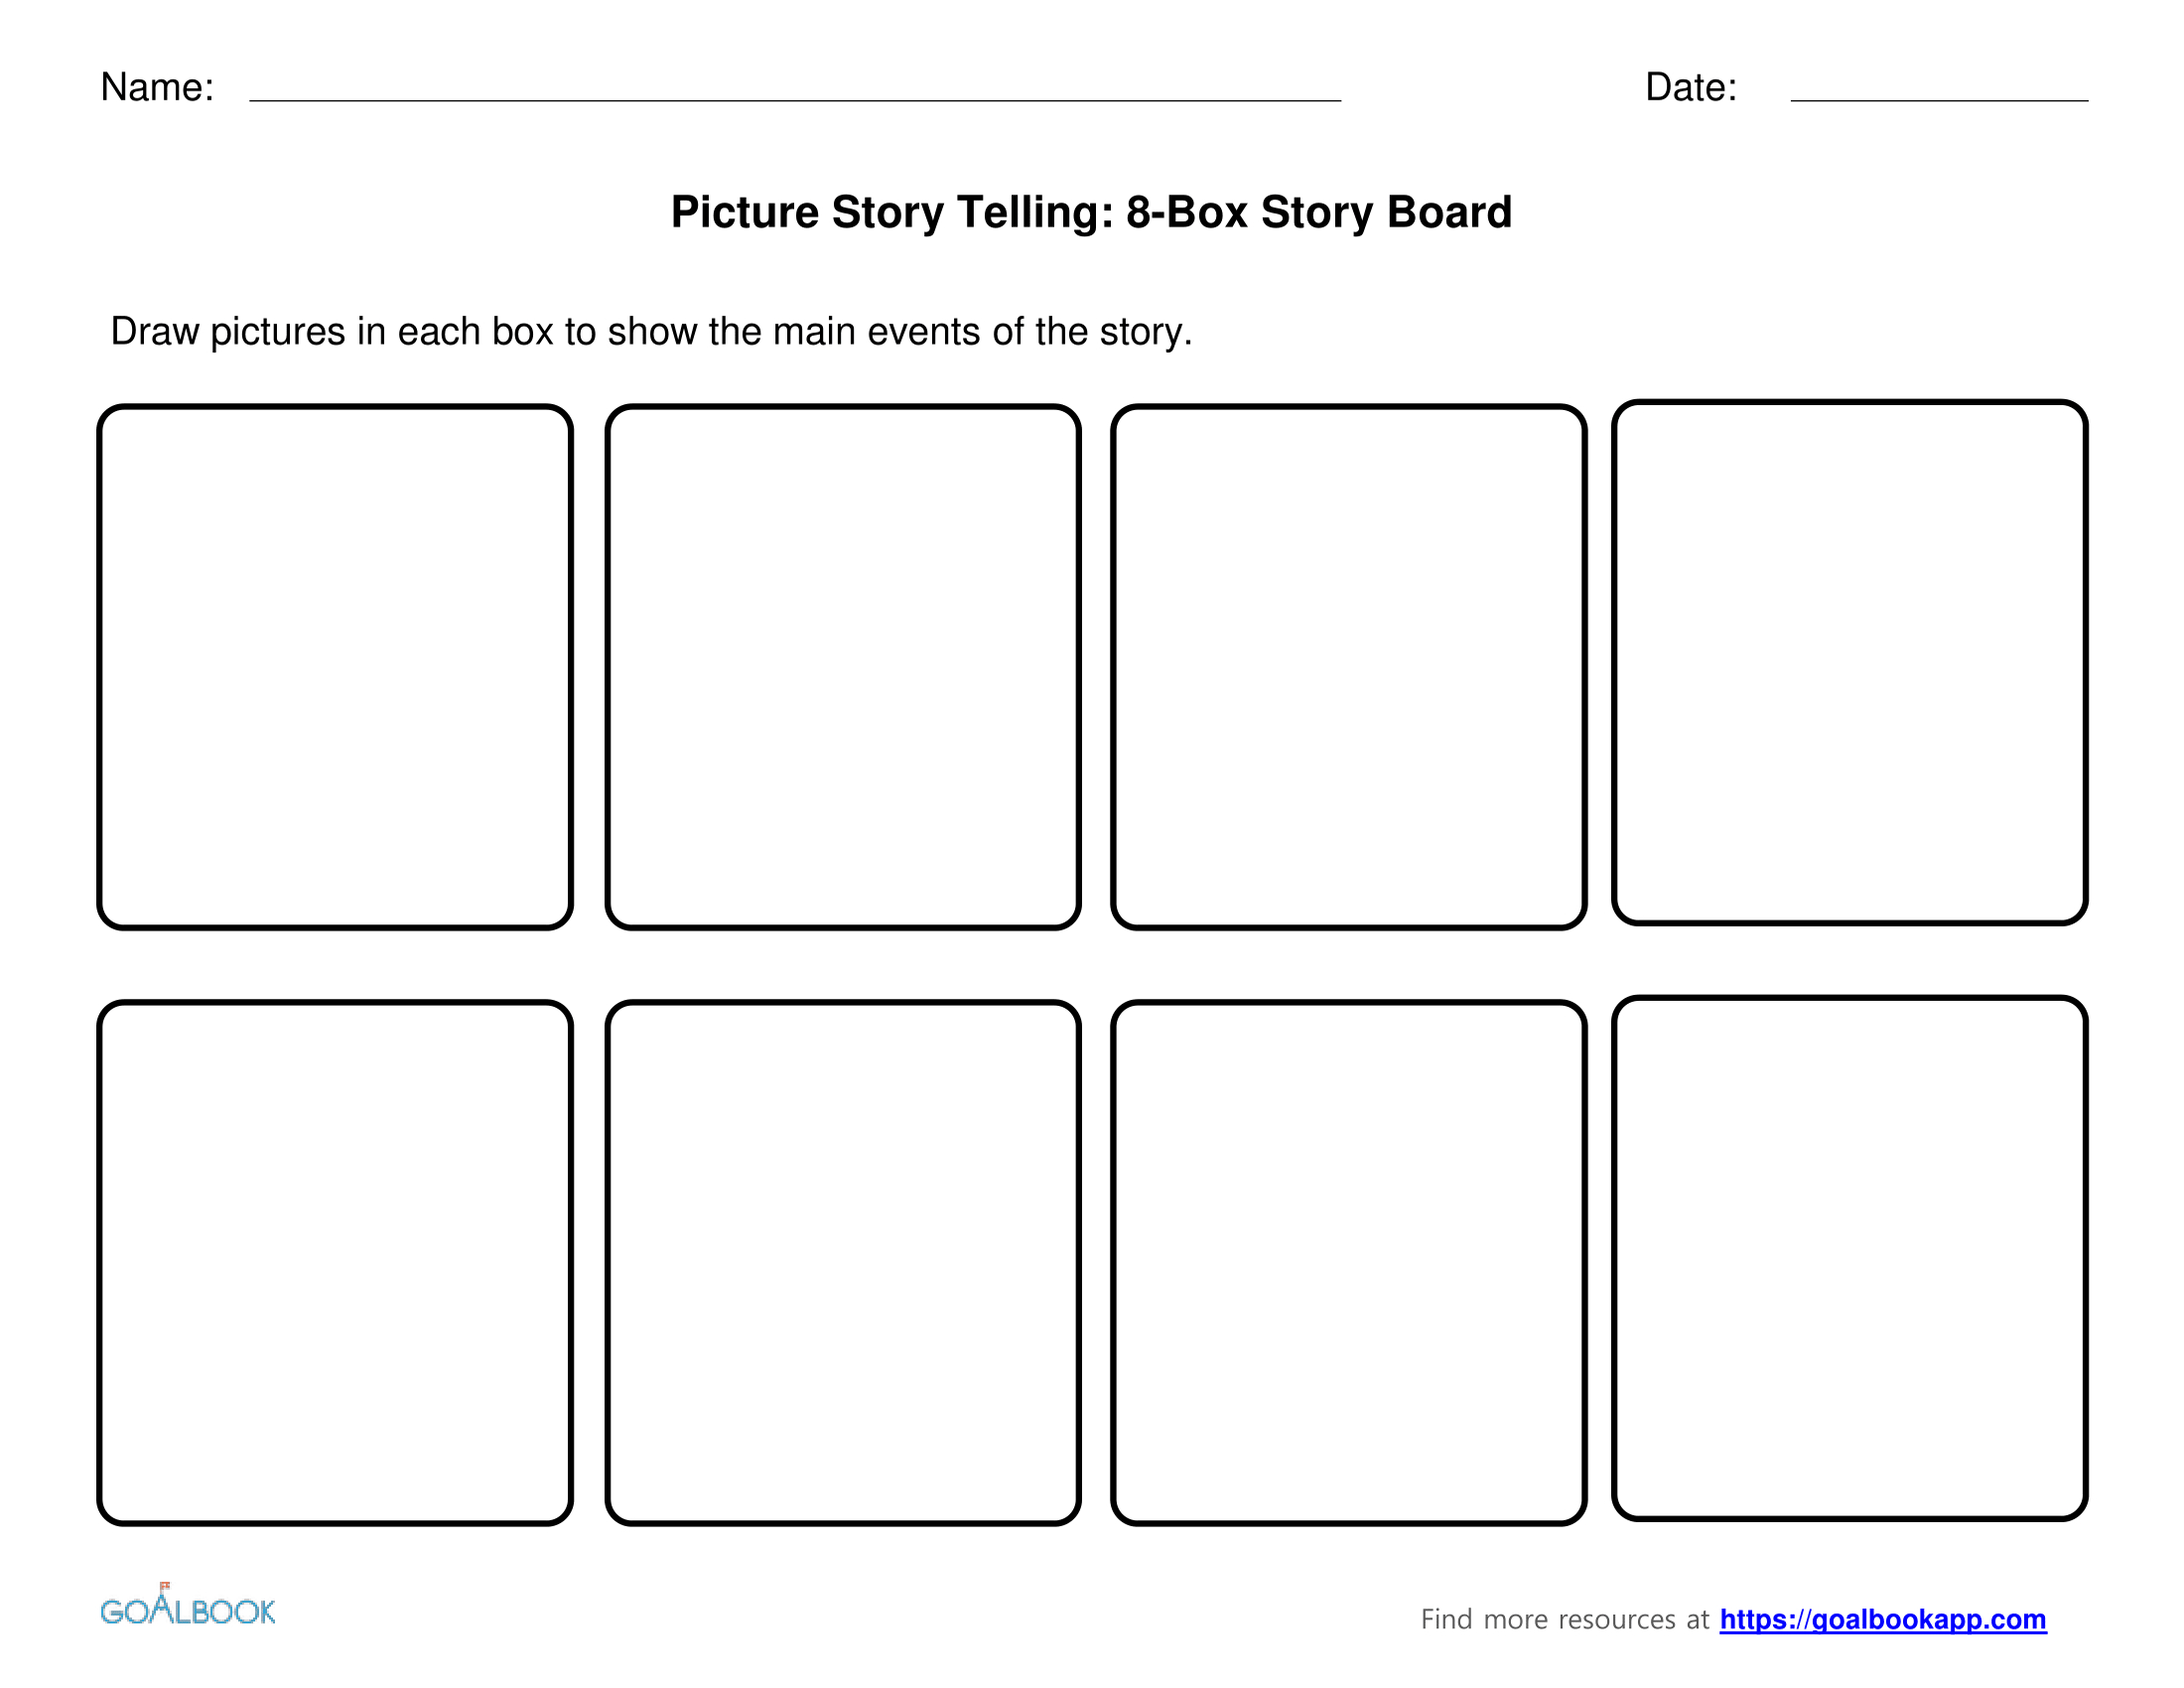 Comic Strip Writing | Udl Strategies – Goalbook Toolkit Within Printable Blank Comic Strip Template For Kids